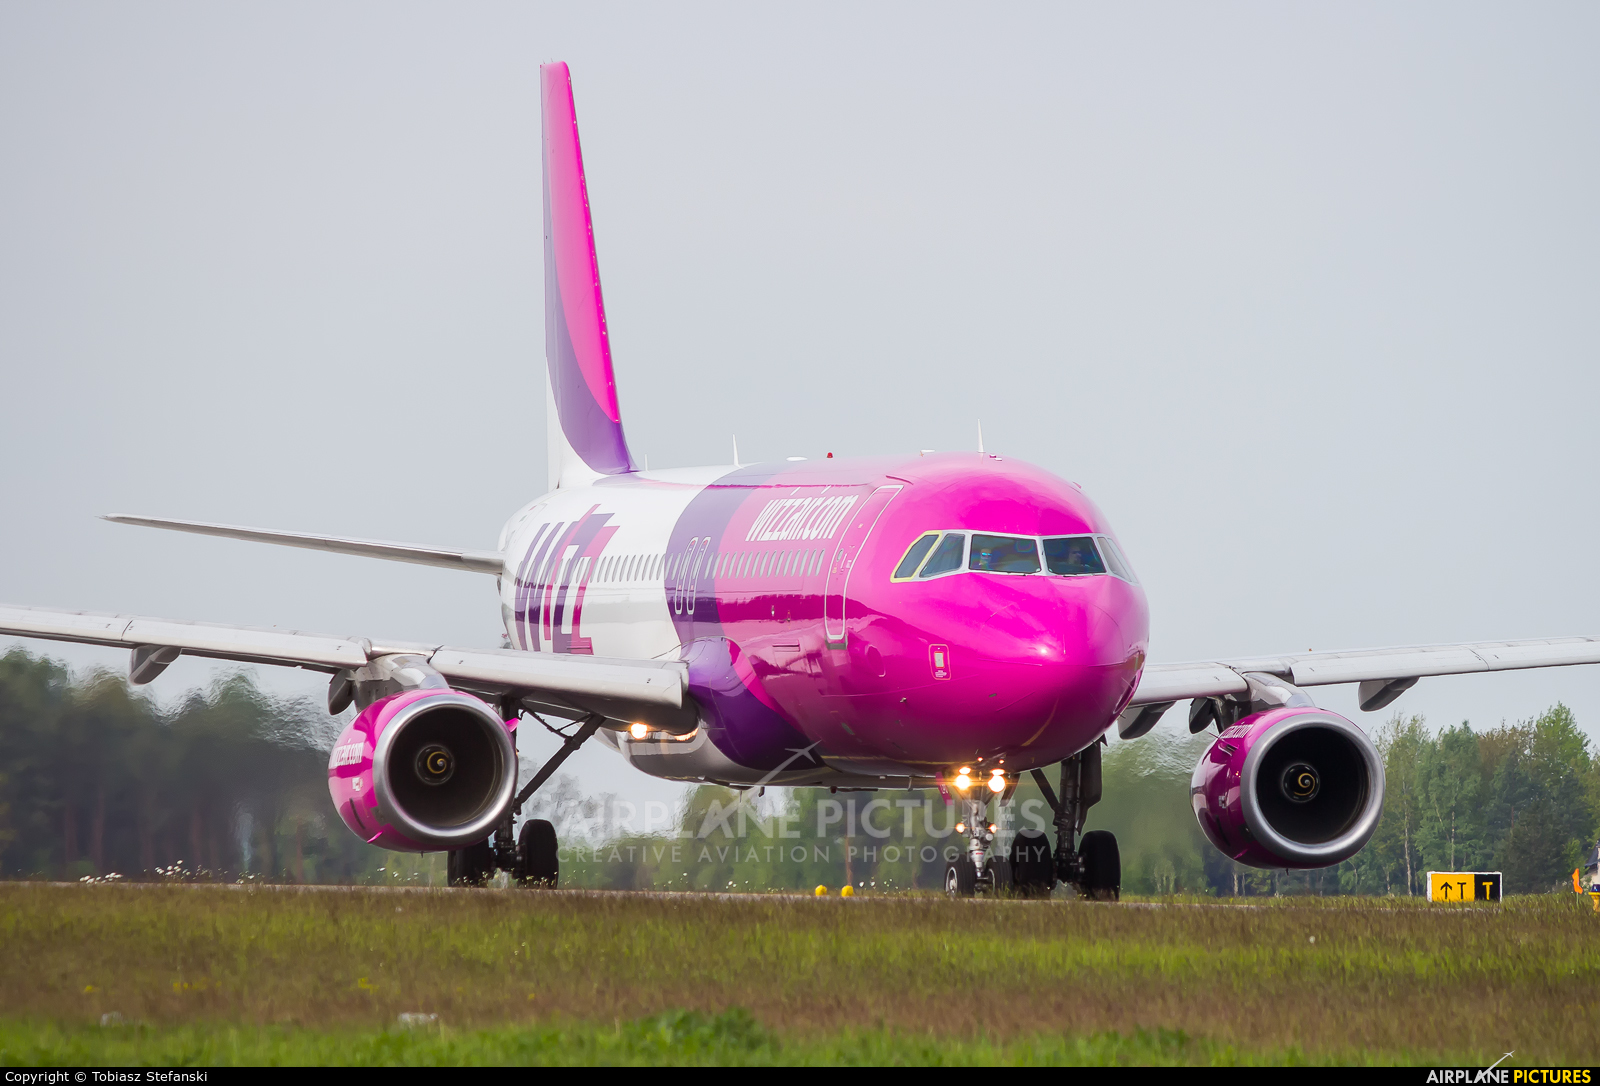 Wizz Air HA-LPQ aircraft at Katowice - Pyrzowice